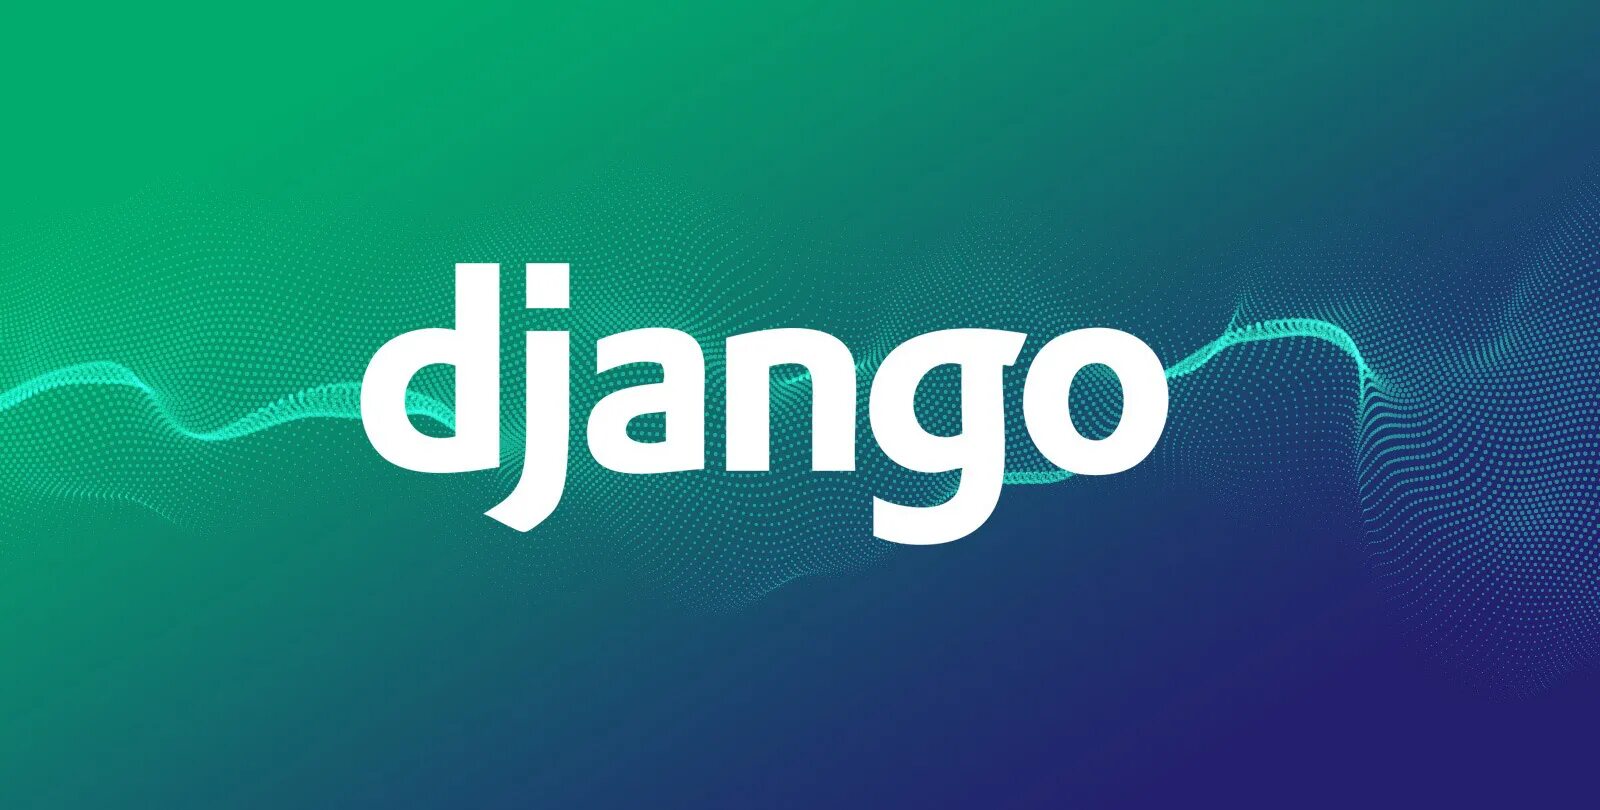 Django unique. Django фреймворк. Django логотип. Django питон. Python-фреймворк Django.